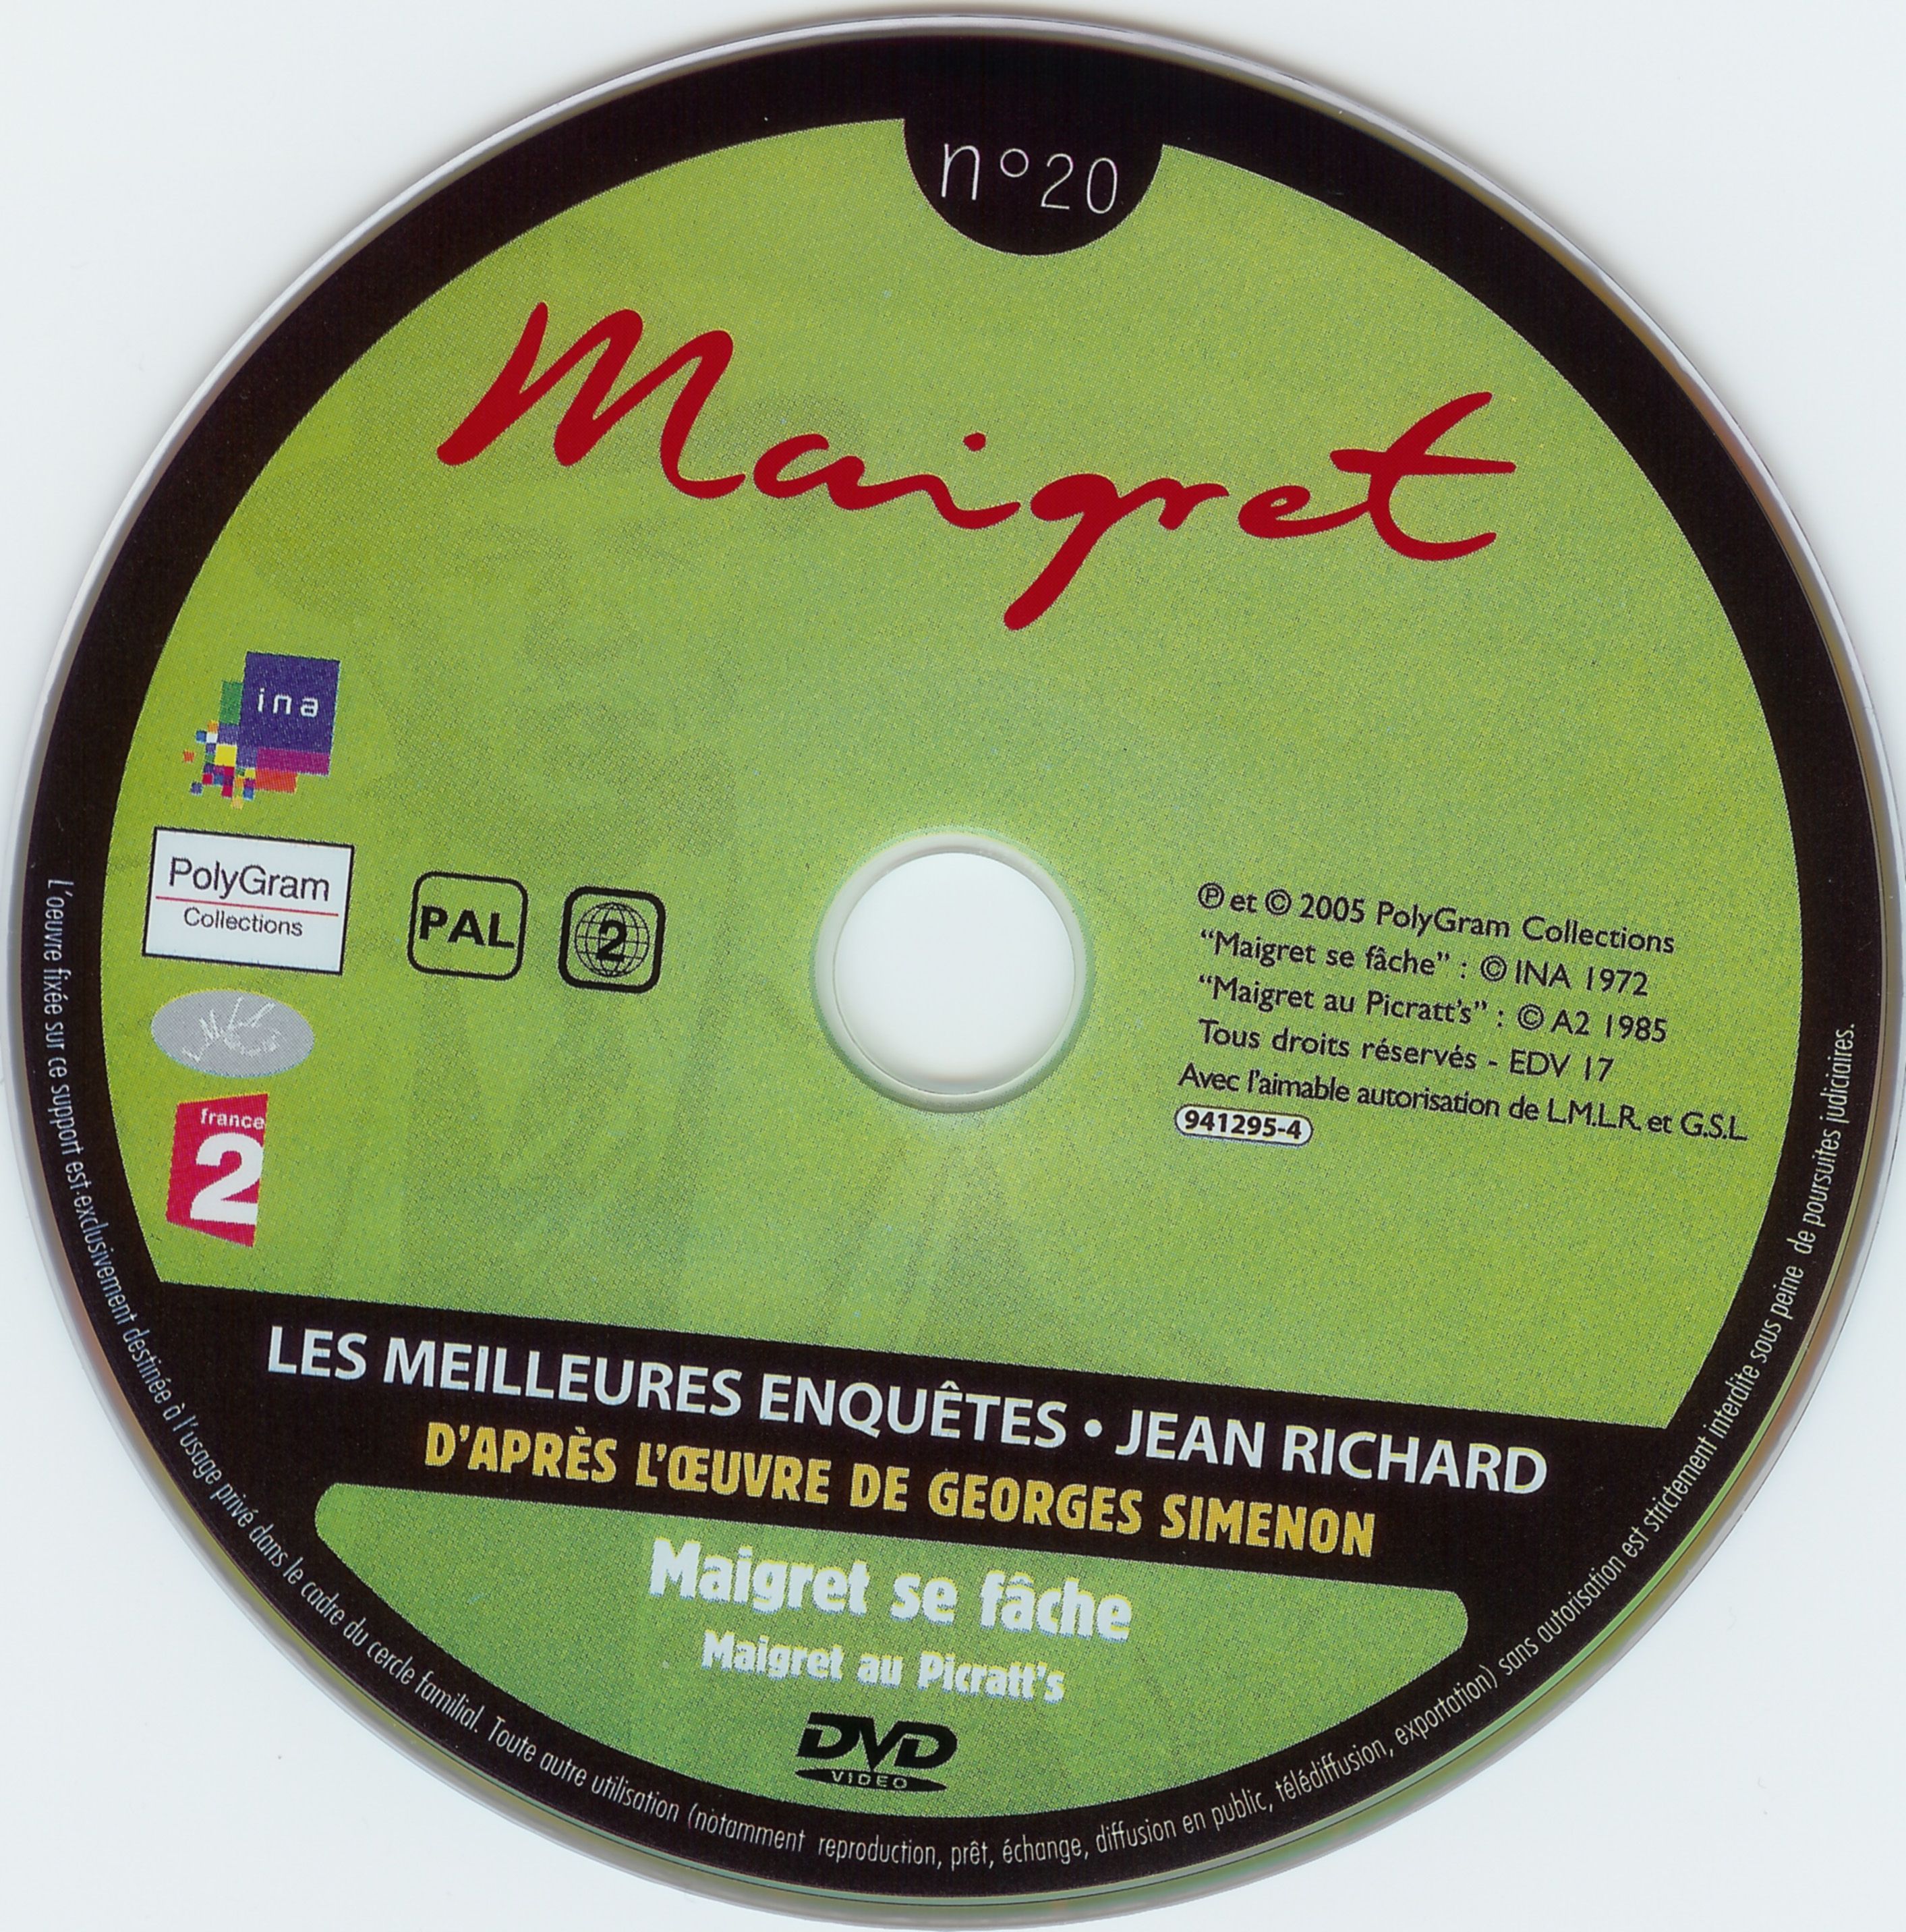 Maigret (Jean Richard) vol 20